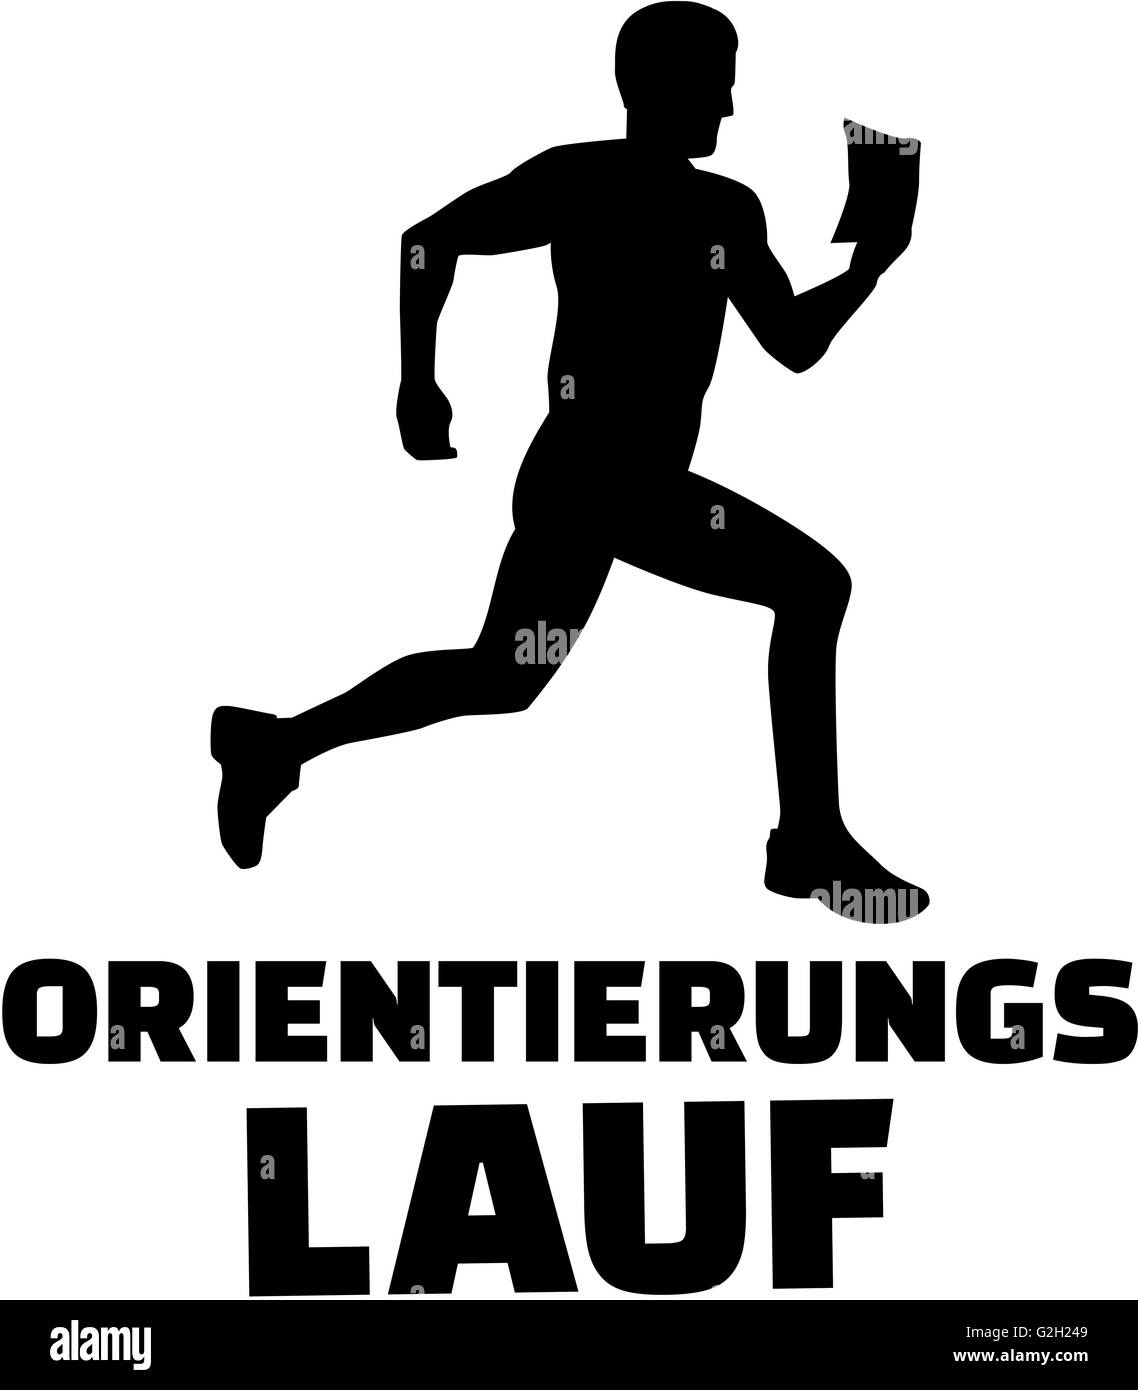 Orienteering with silhouette german Stock Photo